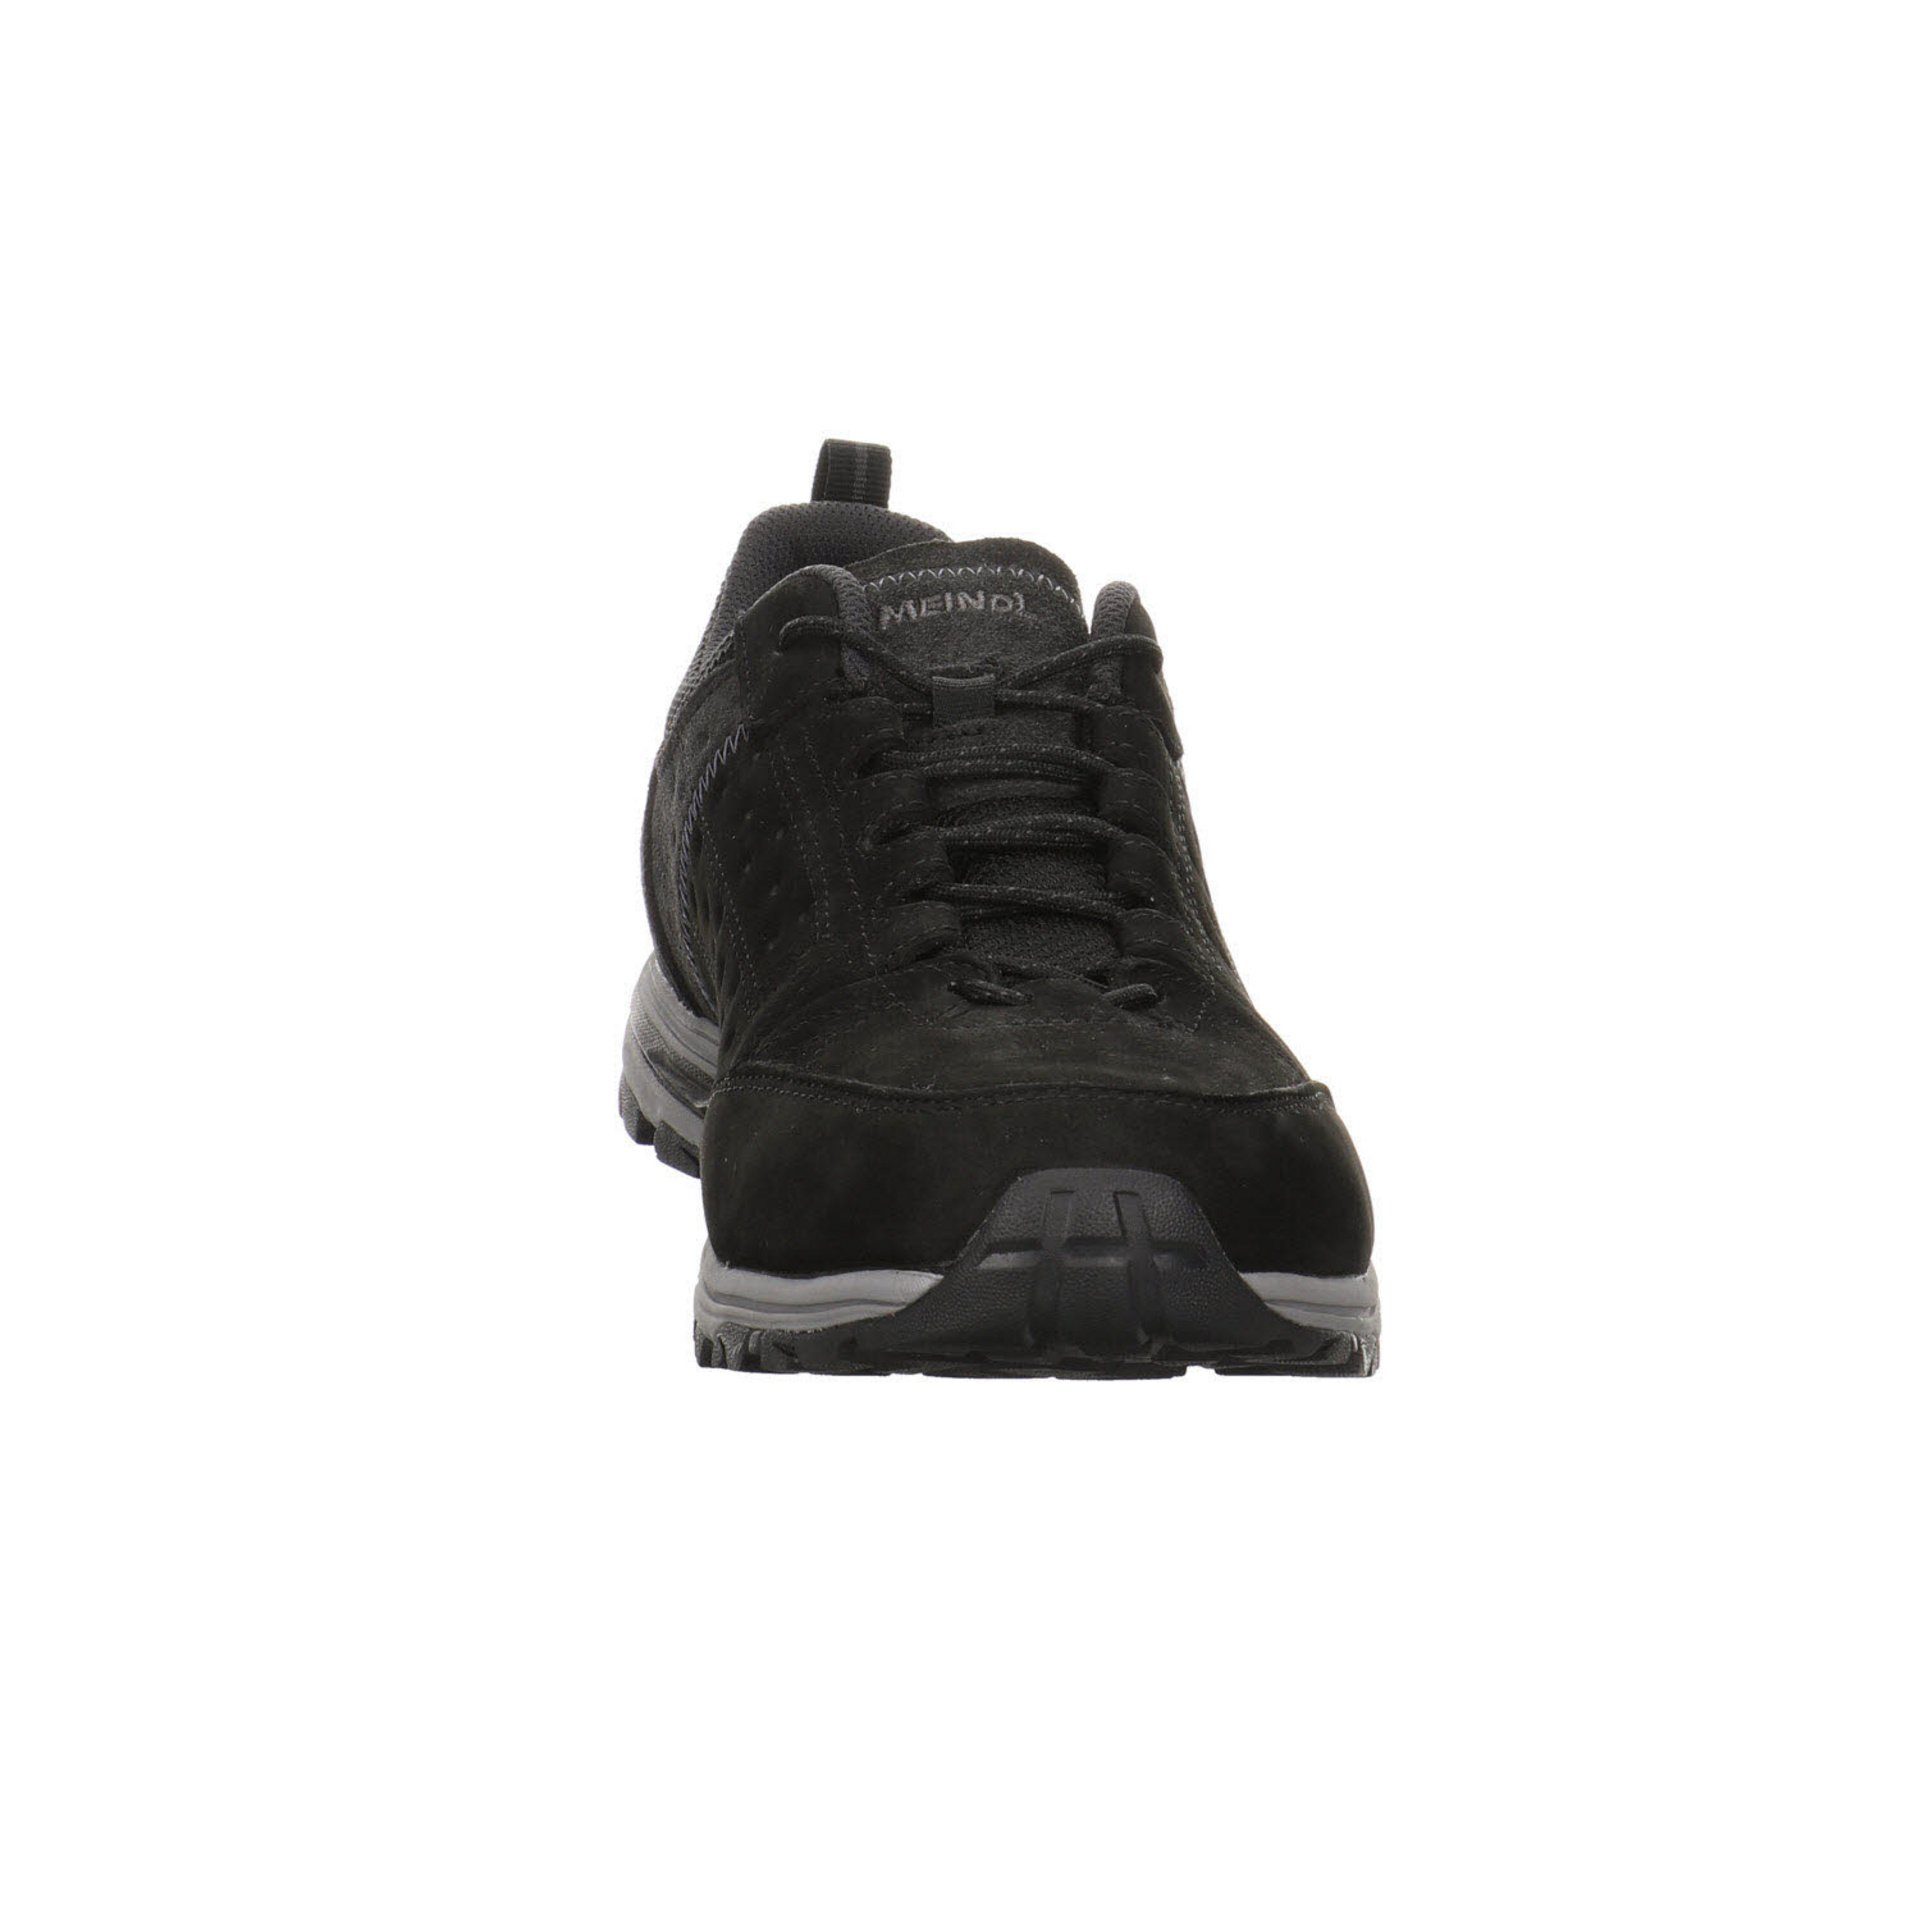 Herren Leder-/Textilkombination schwarz Outdoorschuh Durban Schuhe Outdoorschuh Outdoor dunkel Meindl GTX